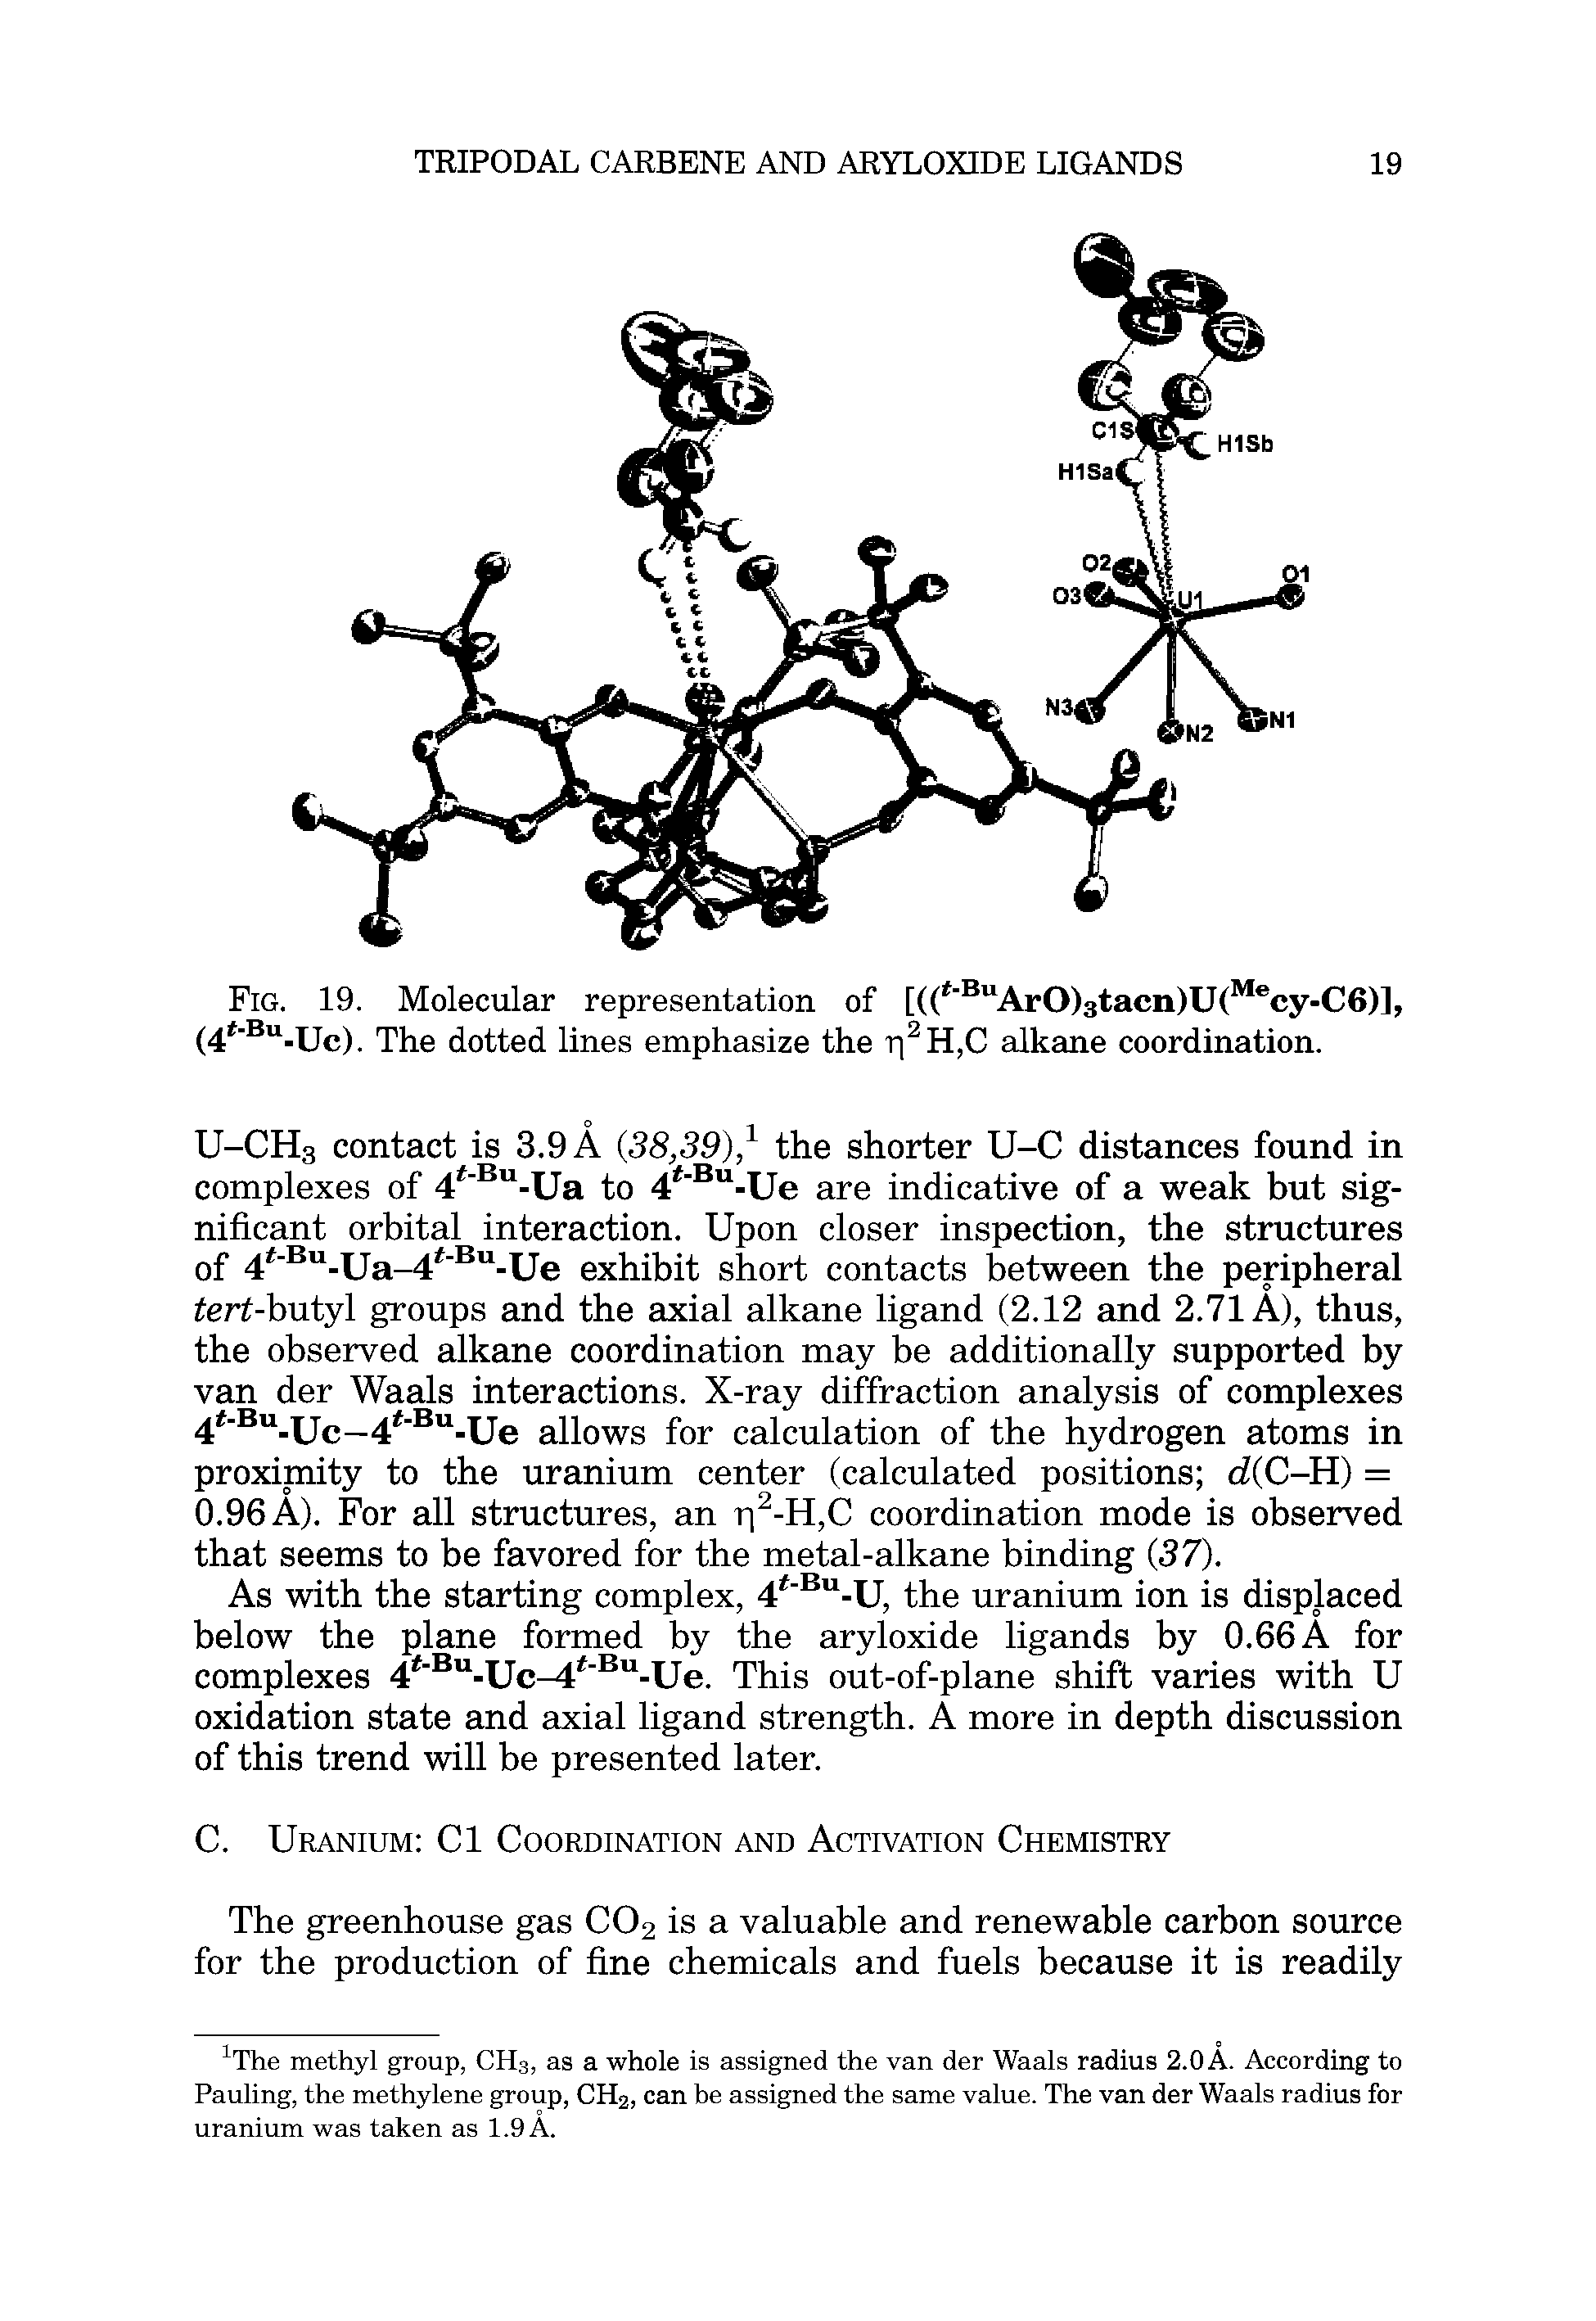 Fig. 19. Molecular representation of [(( ArO)3tacn)U( cy-C6)], (4 -Bu Uc) dotted lines emphasize the ri H,C alkane coordination.